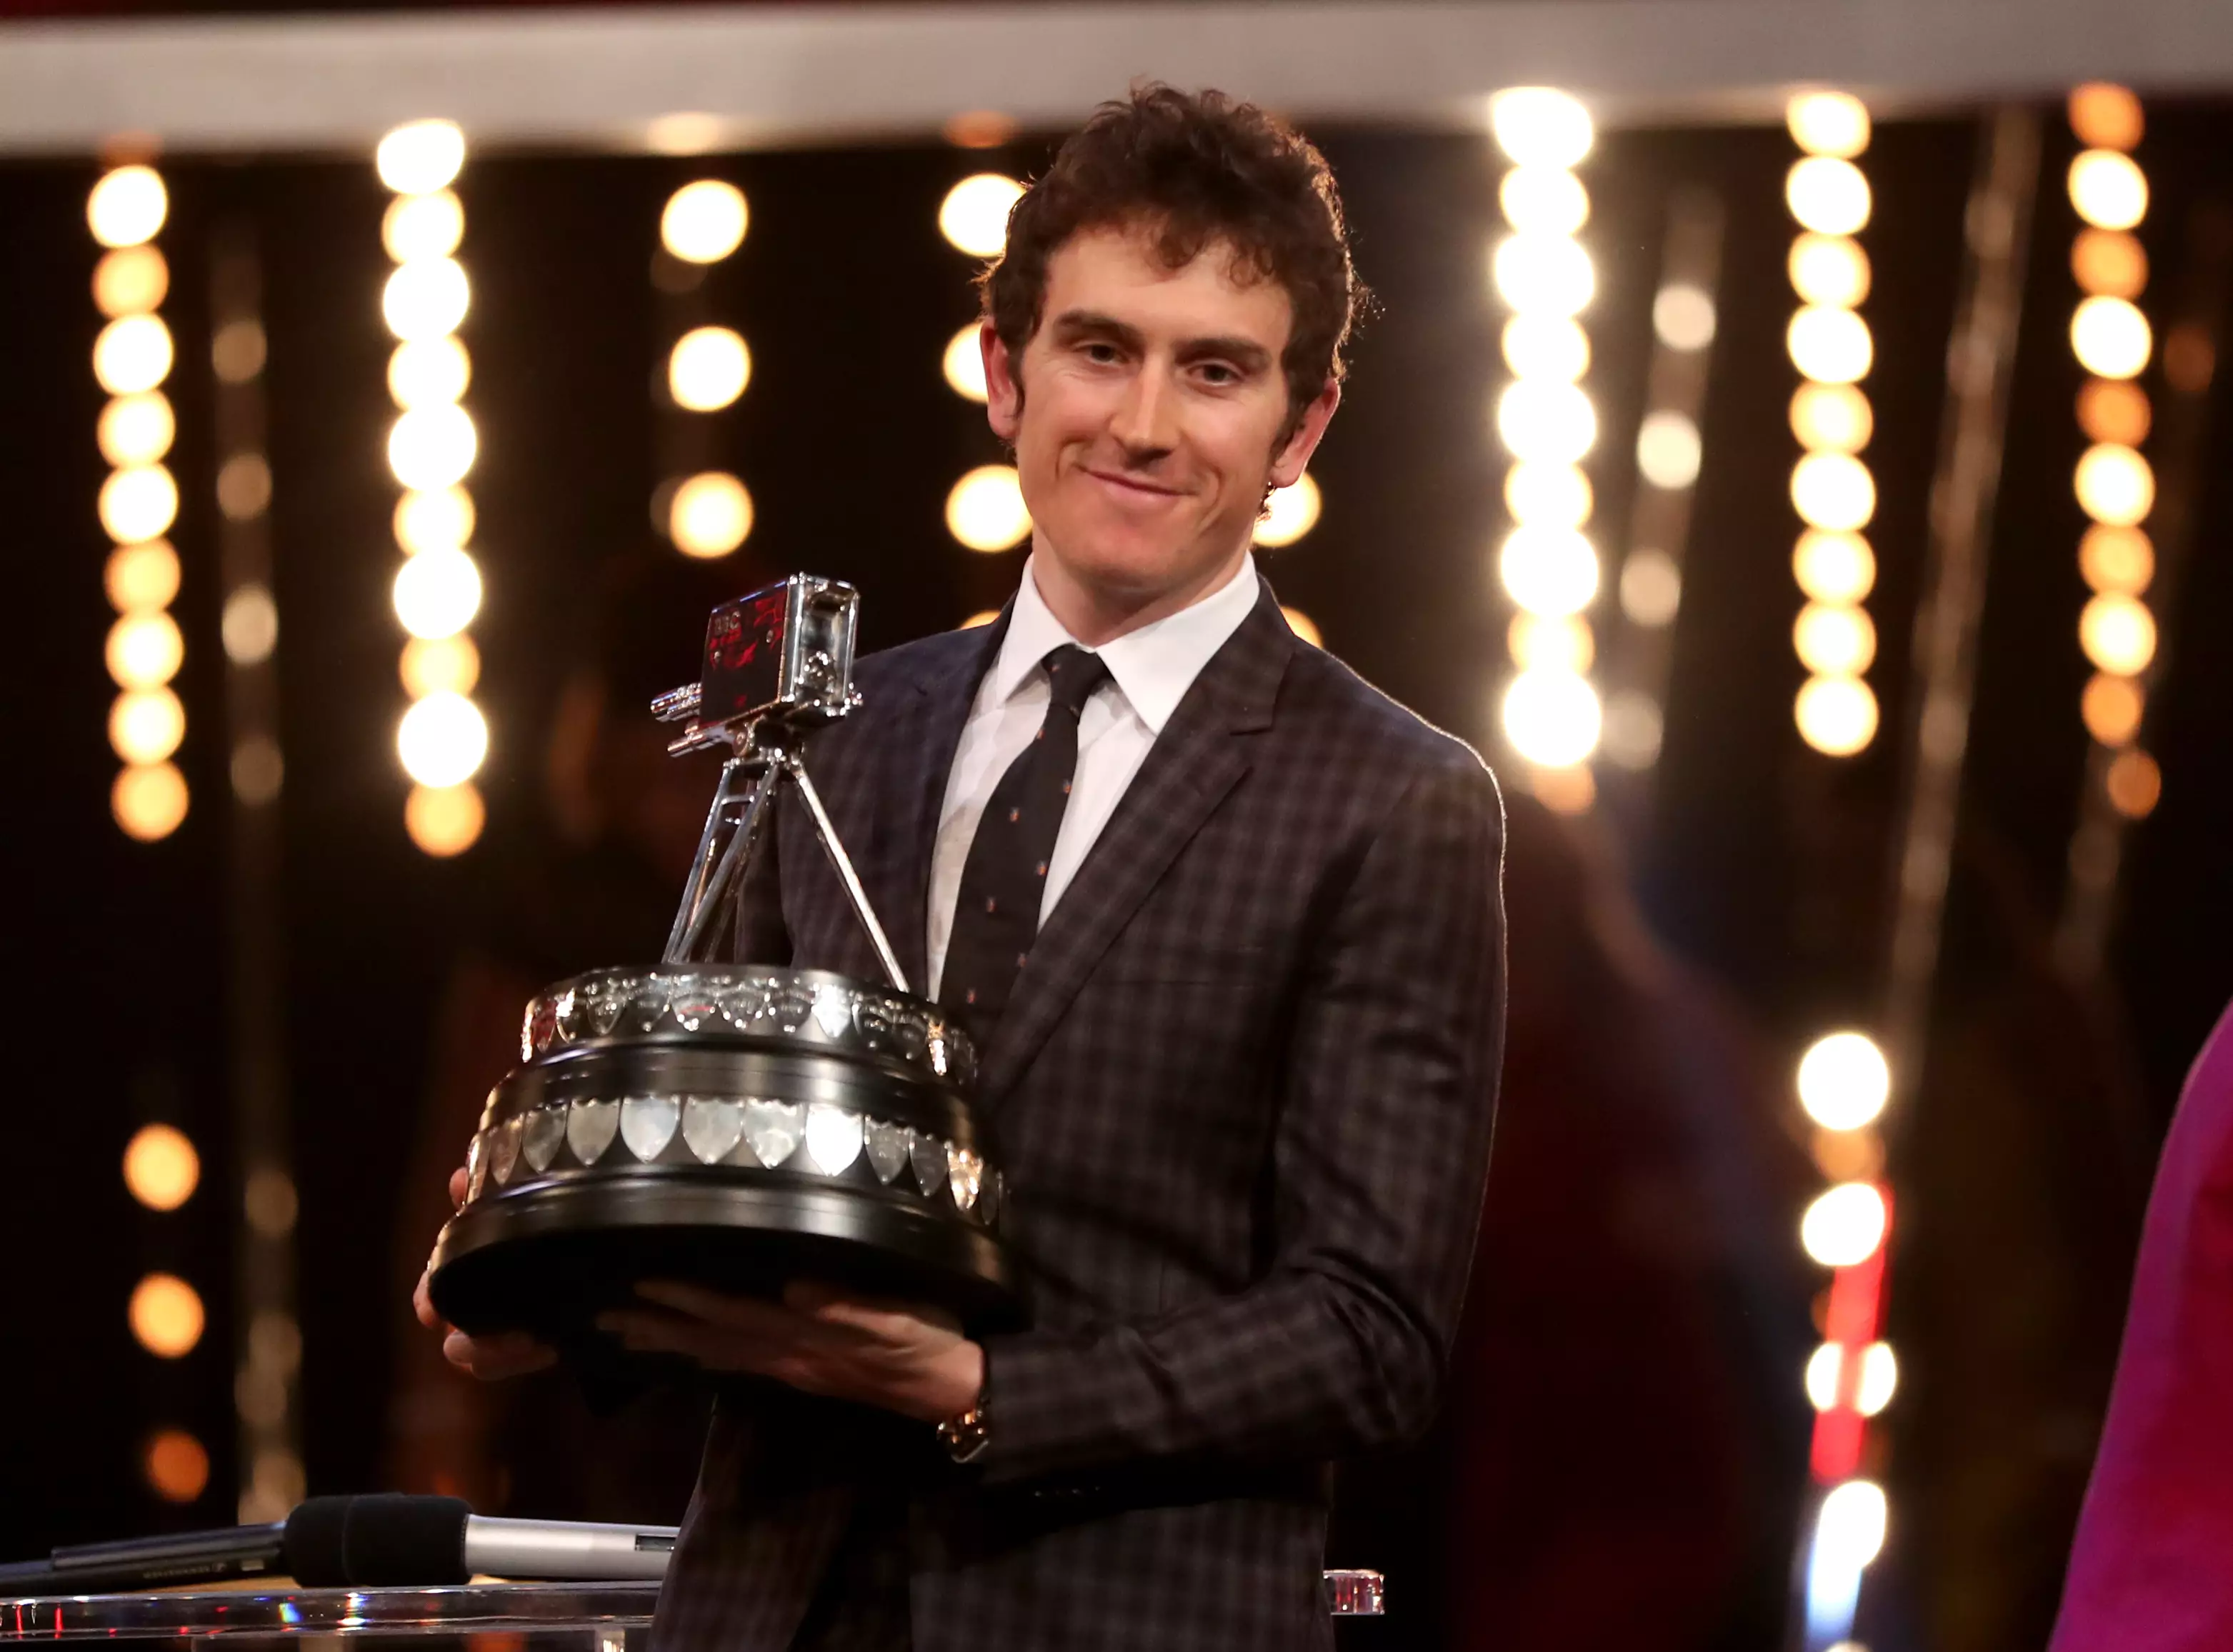 Thomas with his award. Image: PA Images